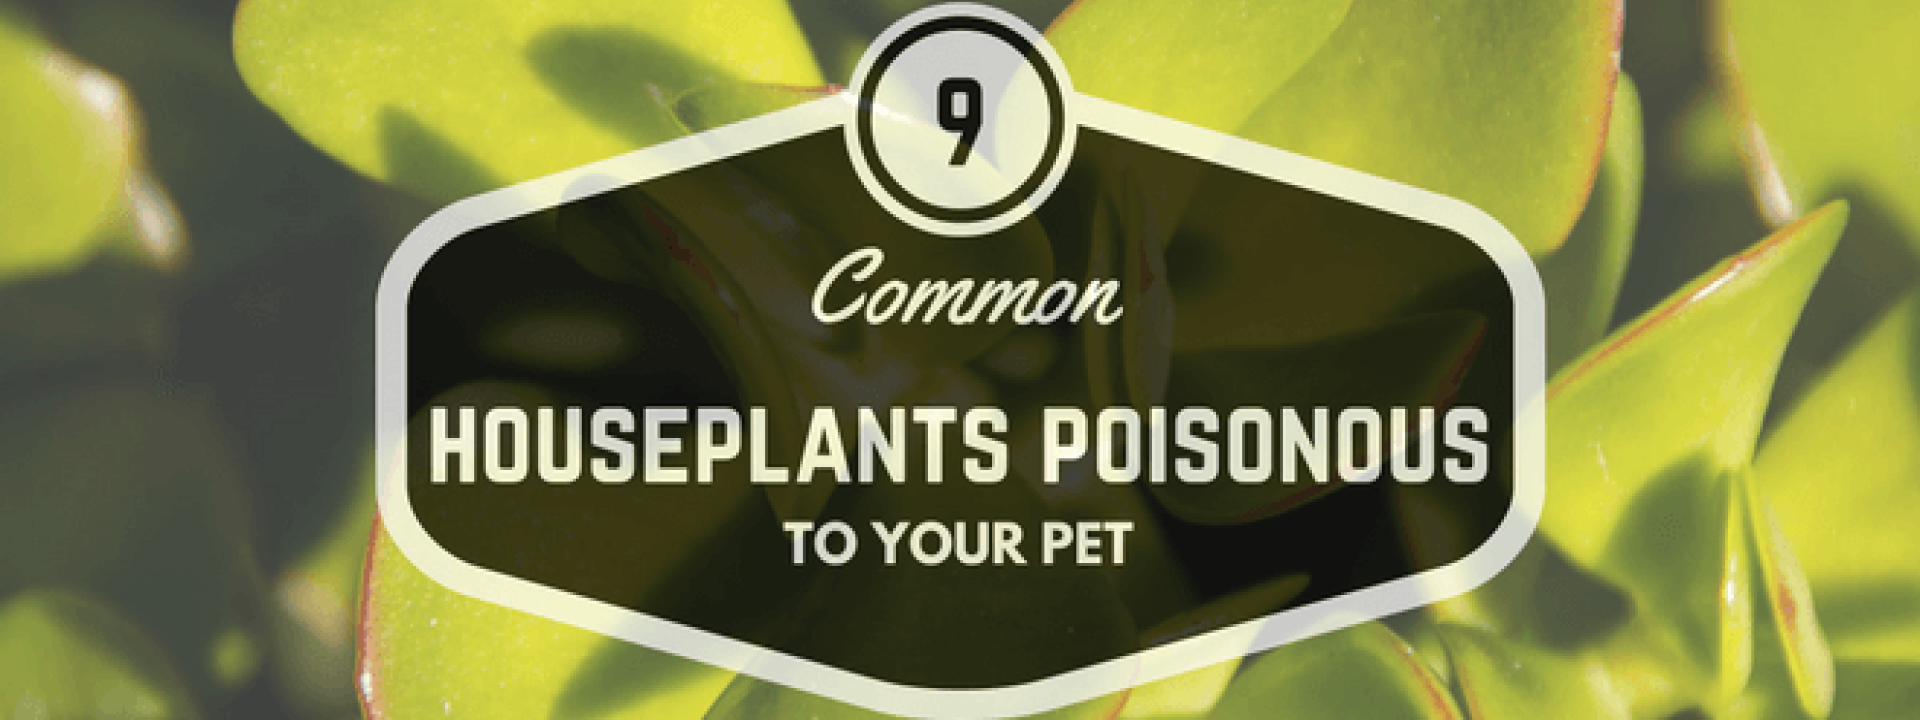 common-houseplants-poisonous-to-your-pet